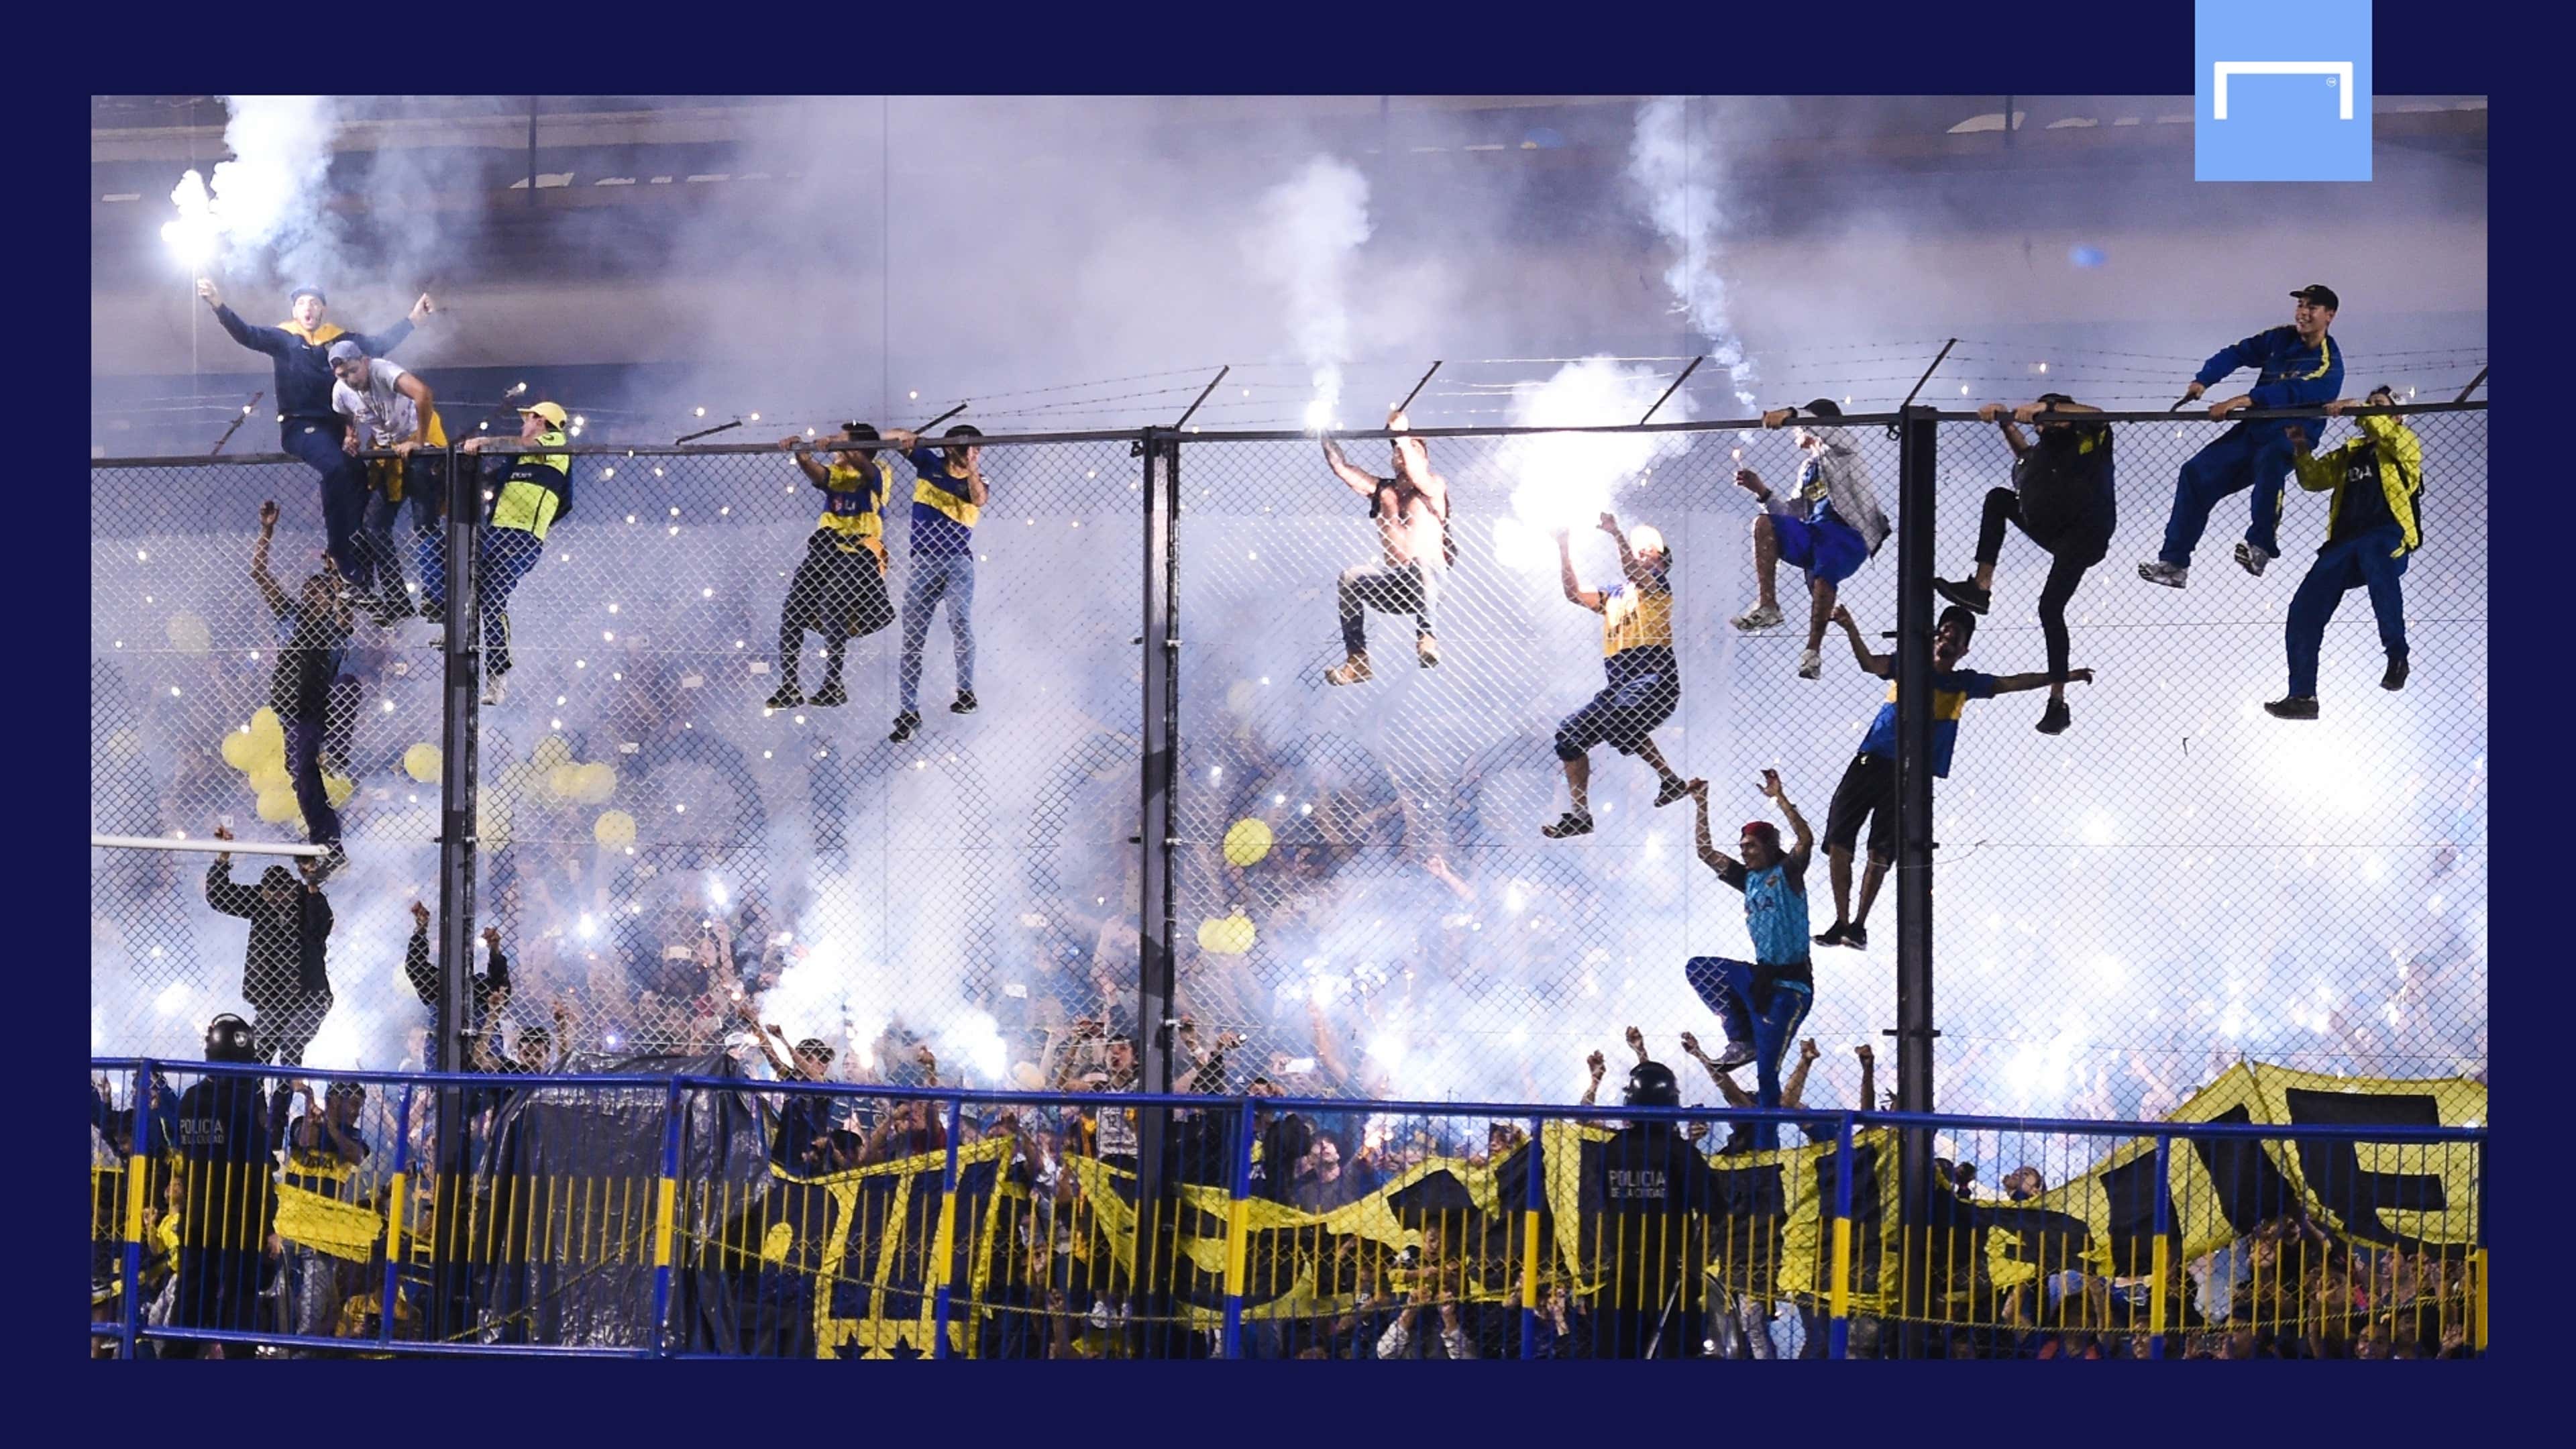 Boca Juniors Bombonera GFX